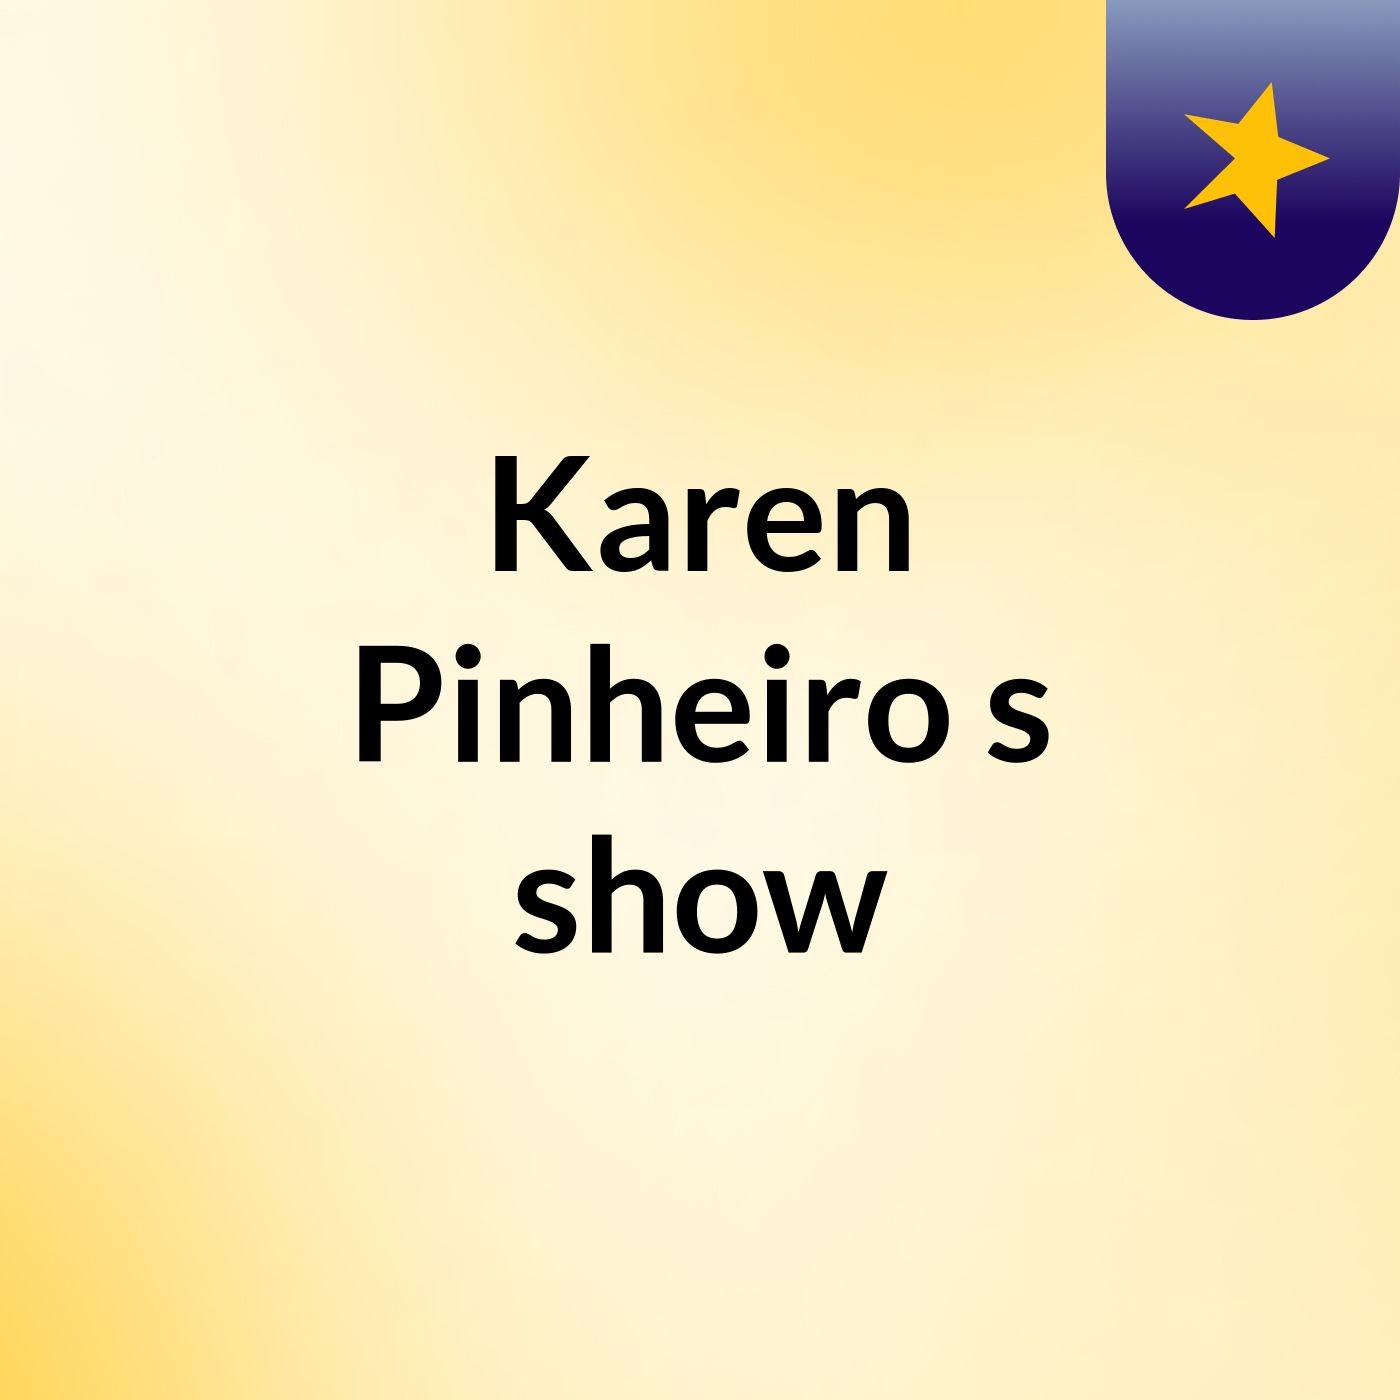 Karen Pinheiro's show